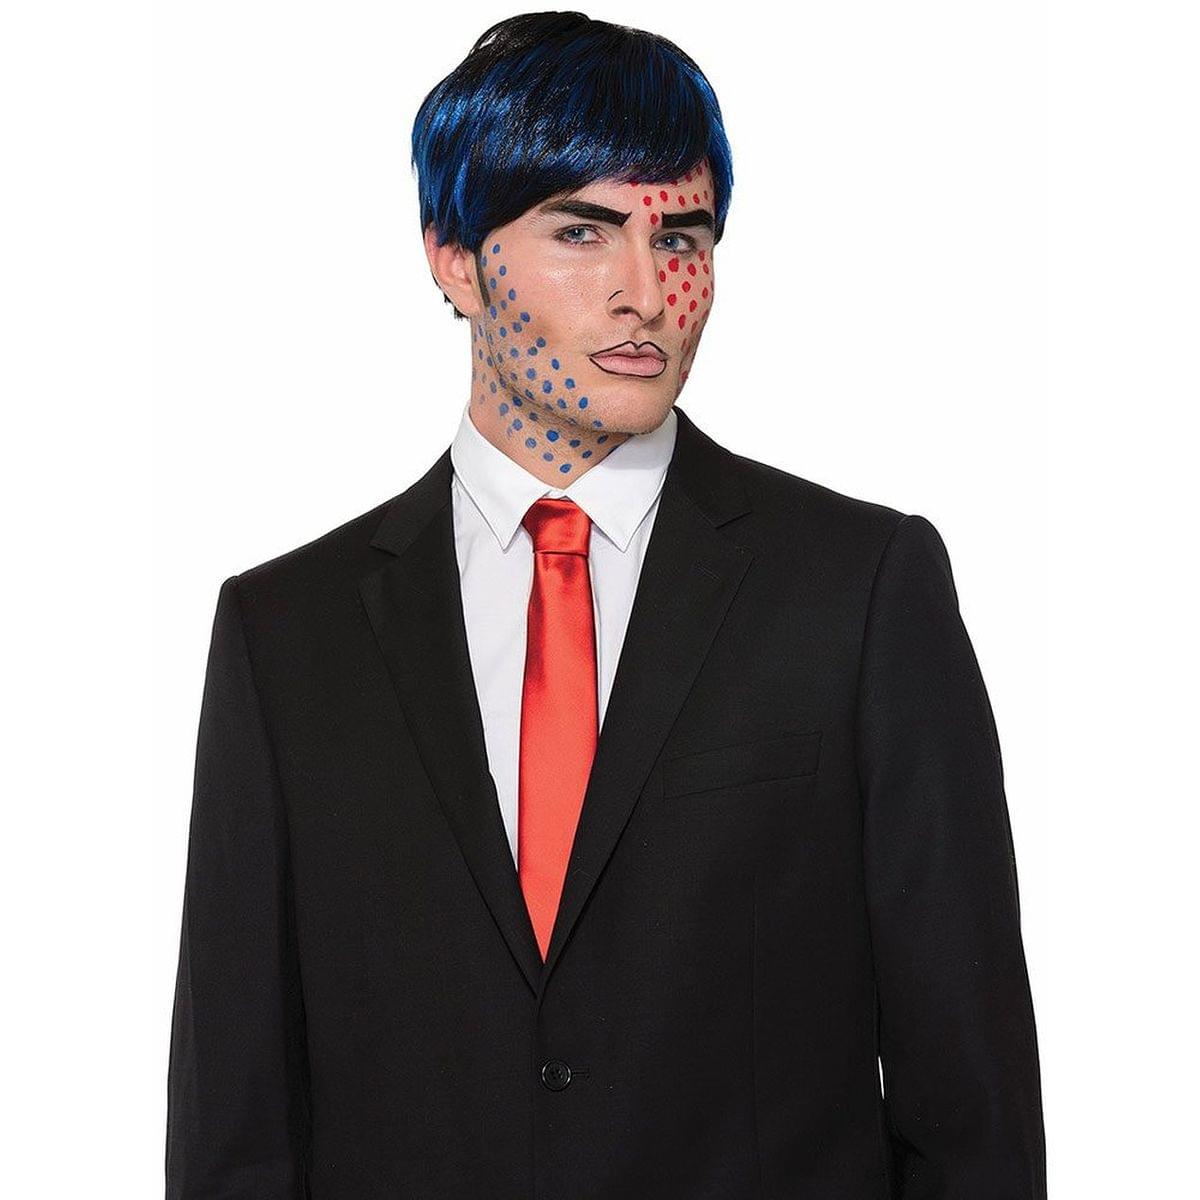 Bobby Boom Pop Art Costume Wig Black/Blue Adult Men